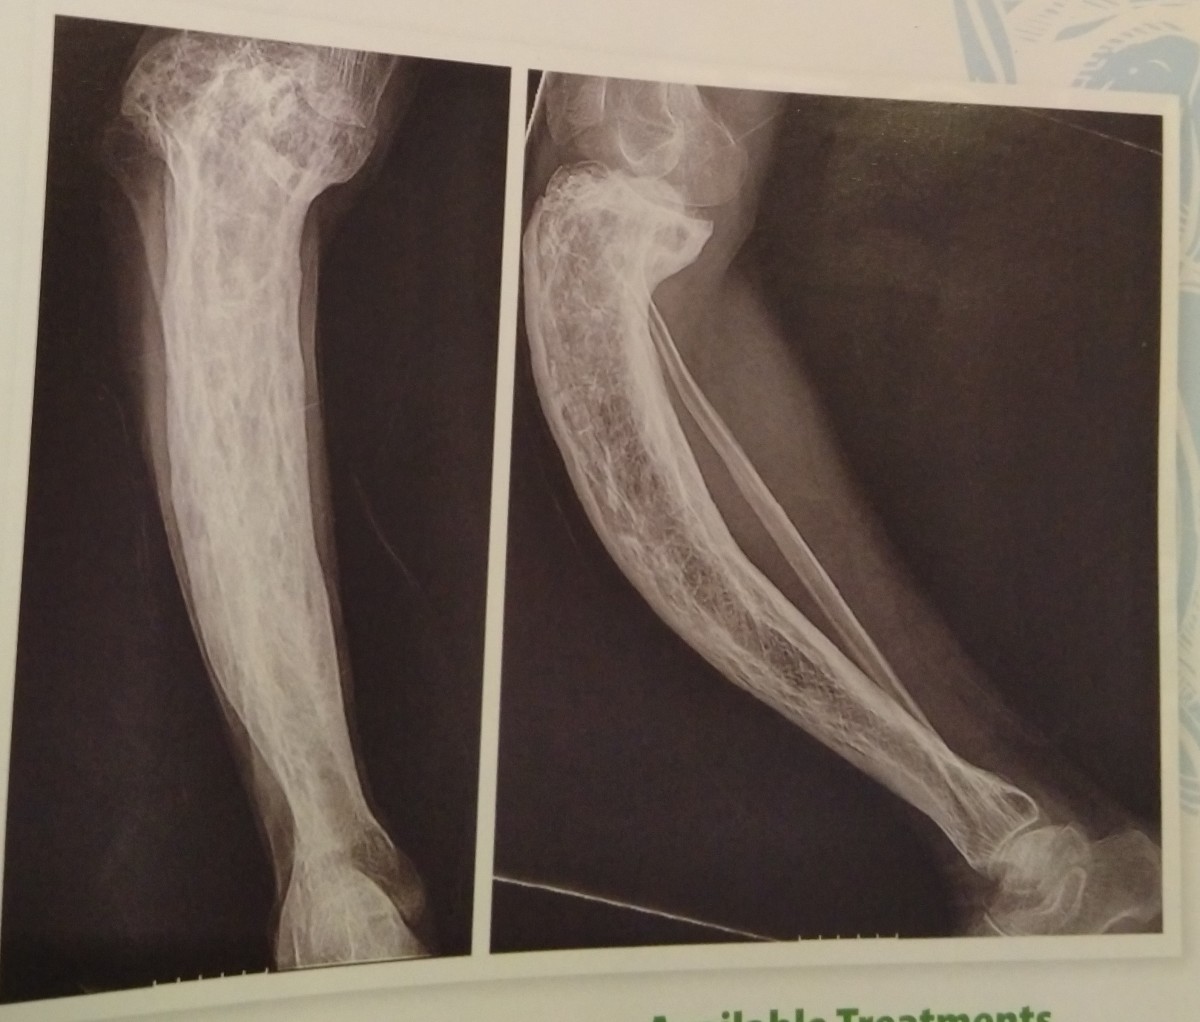 Normal vs. Paget's bone on leg